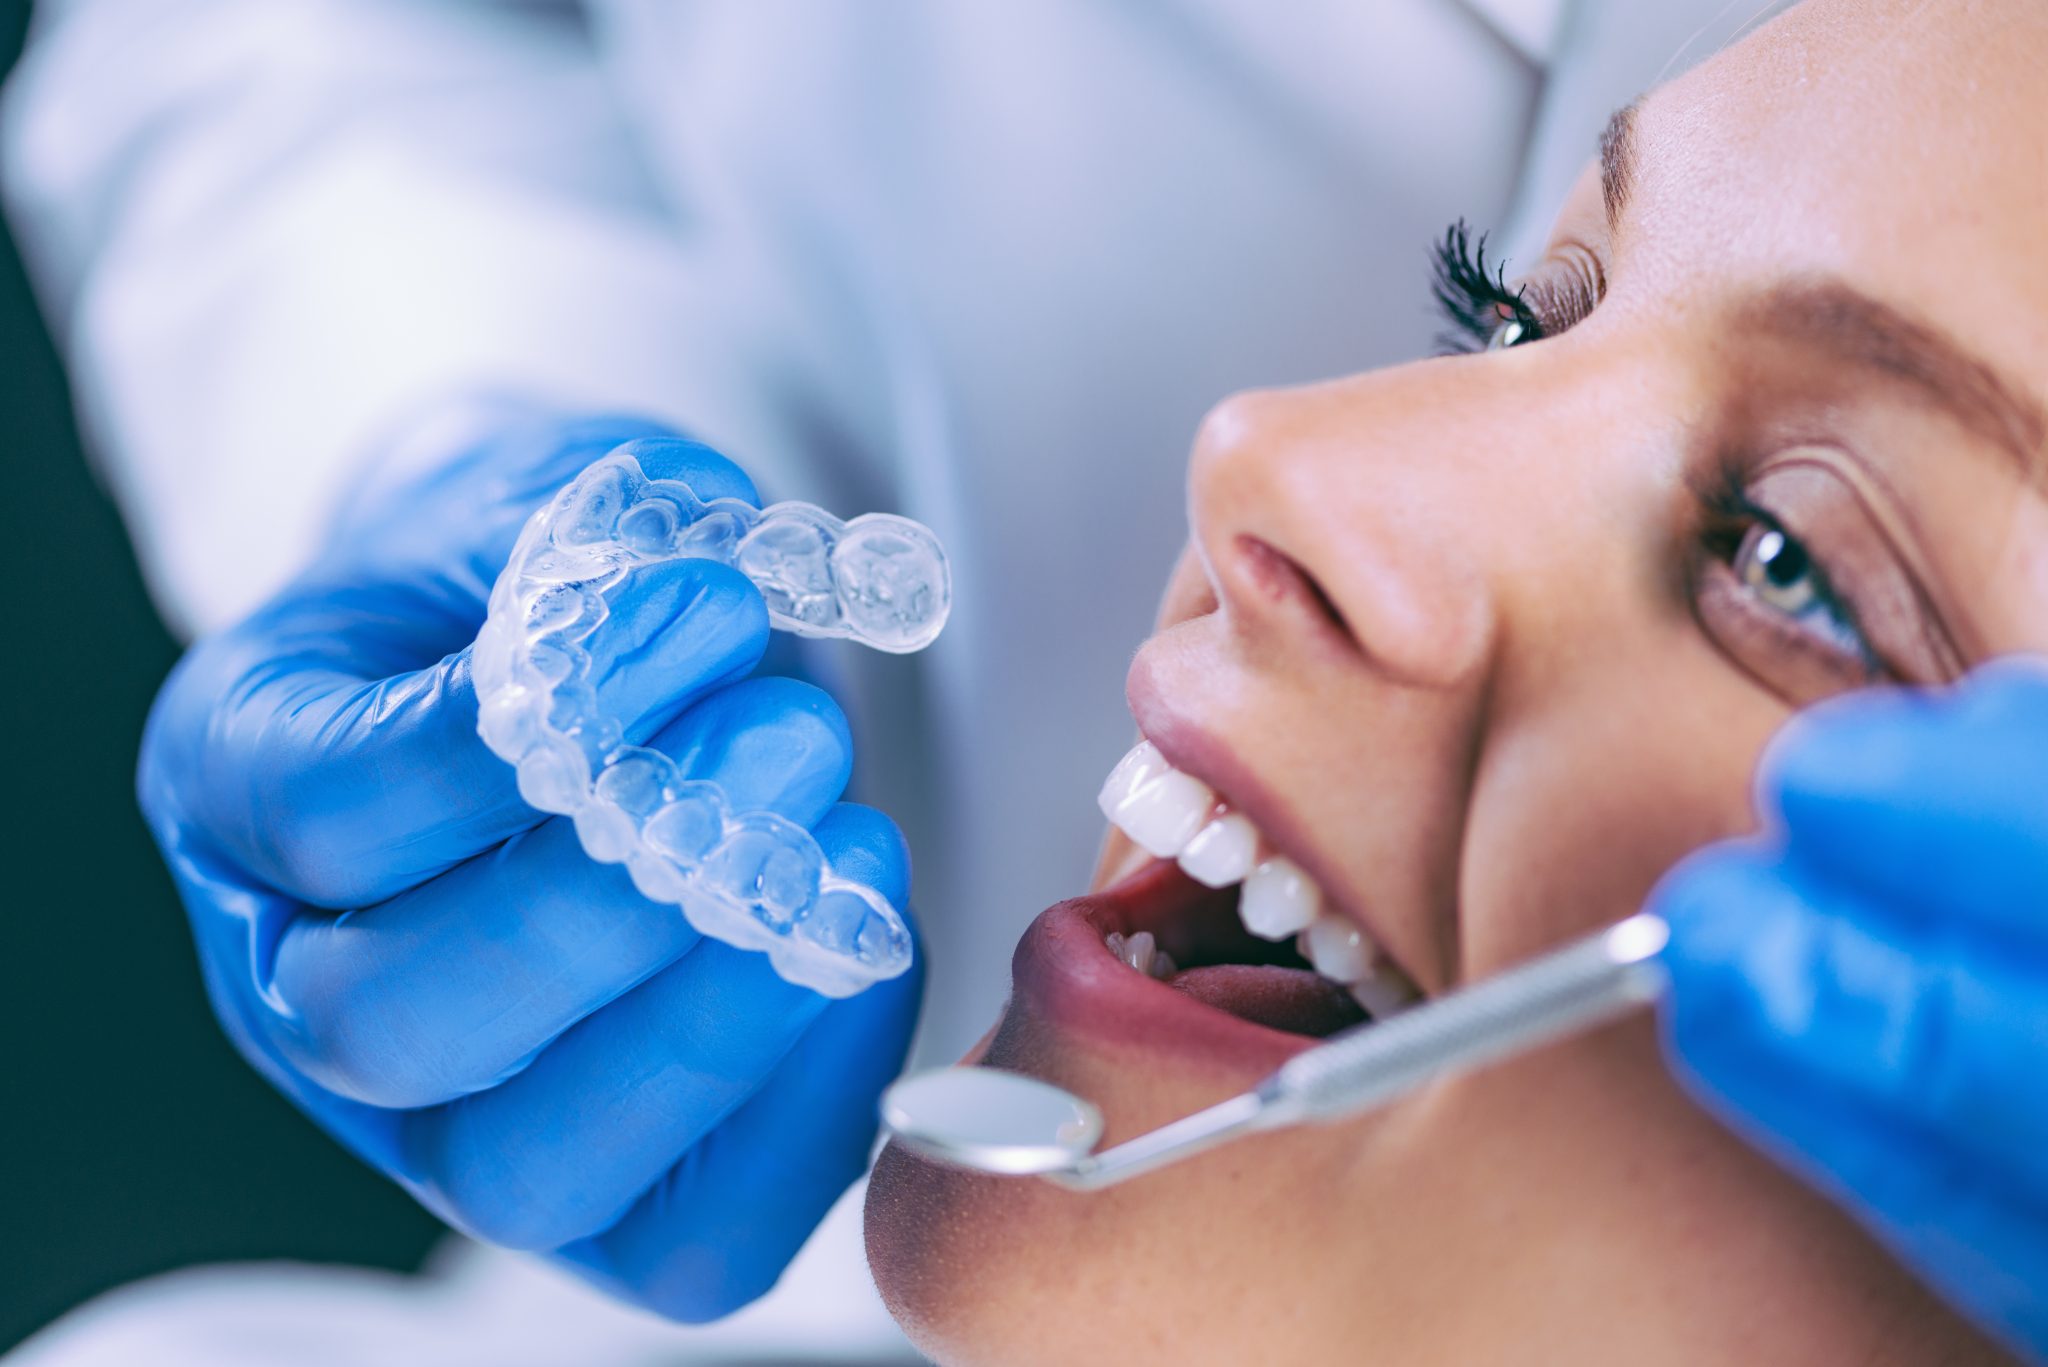 Por que as lentes de contato dental agregam valor ao seu sorriso? - image clareamento-dental-procedimento-1-scaled on https://molinosodontologia.com.br